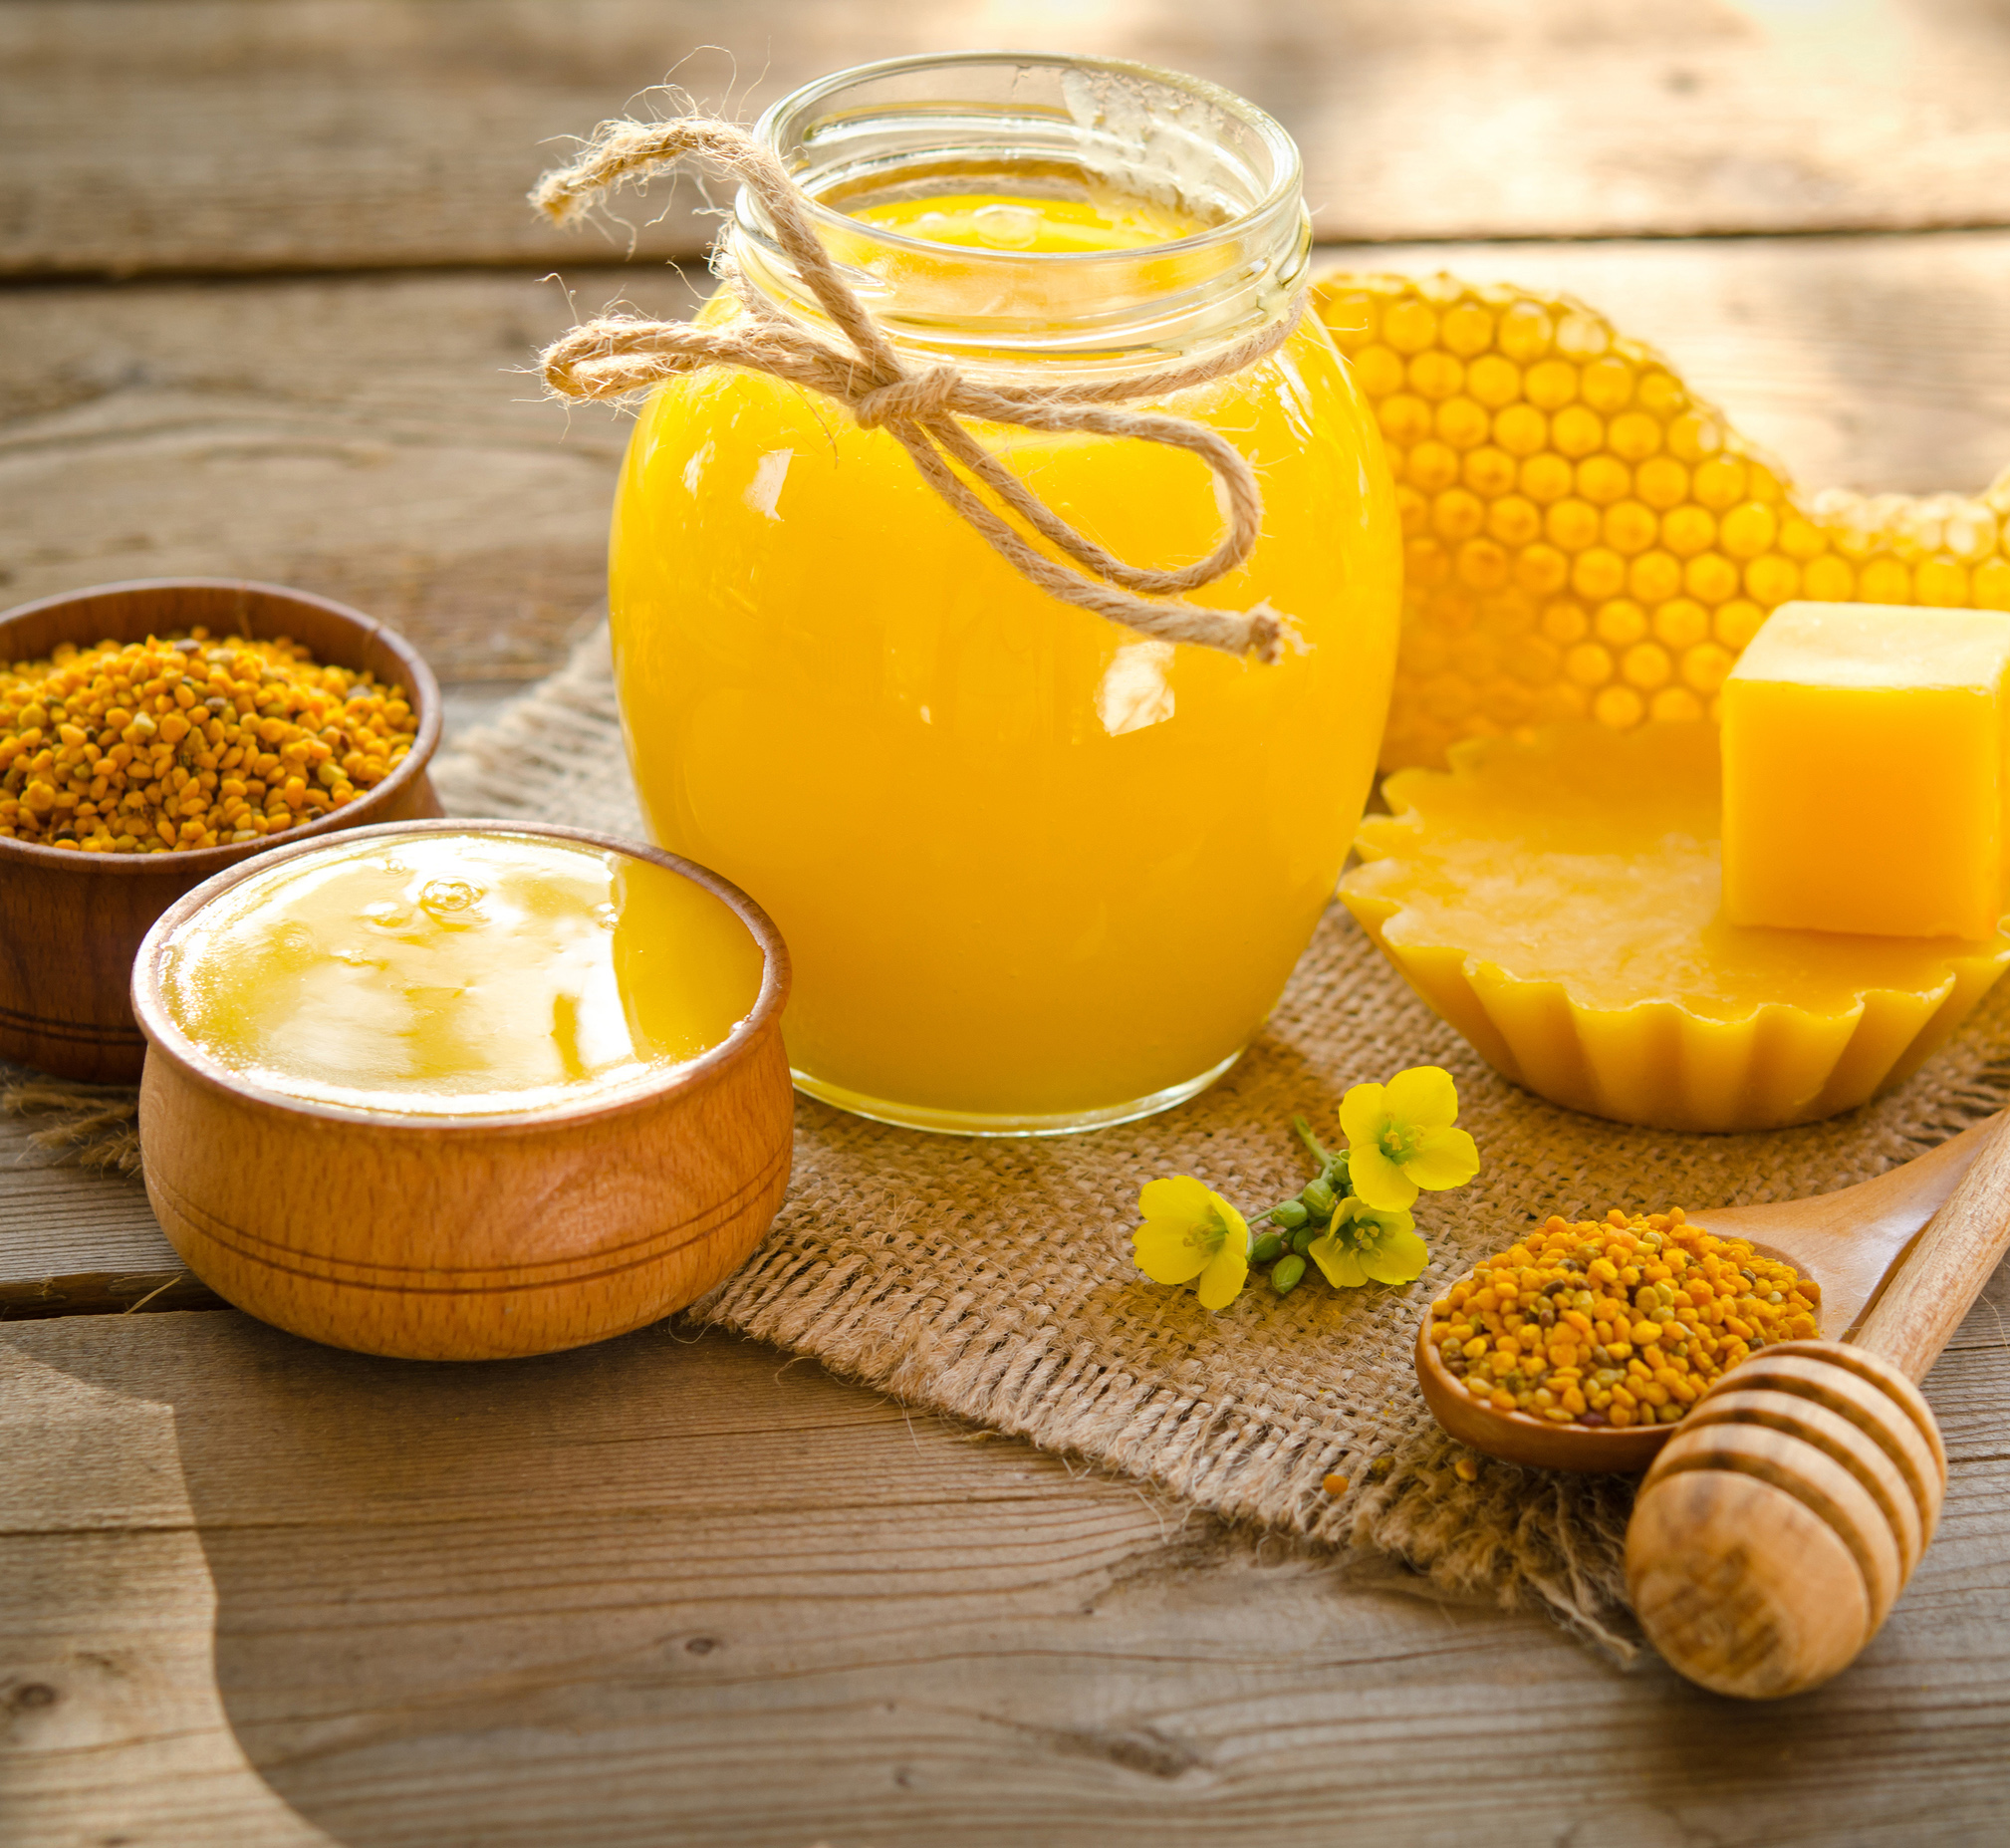 Honey фото. Мёд цветочный. Красивый мед. Желтый мед. Мёд натуральный.